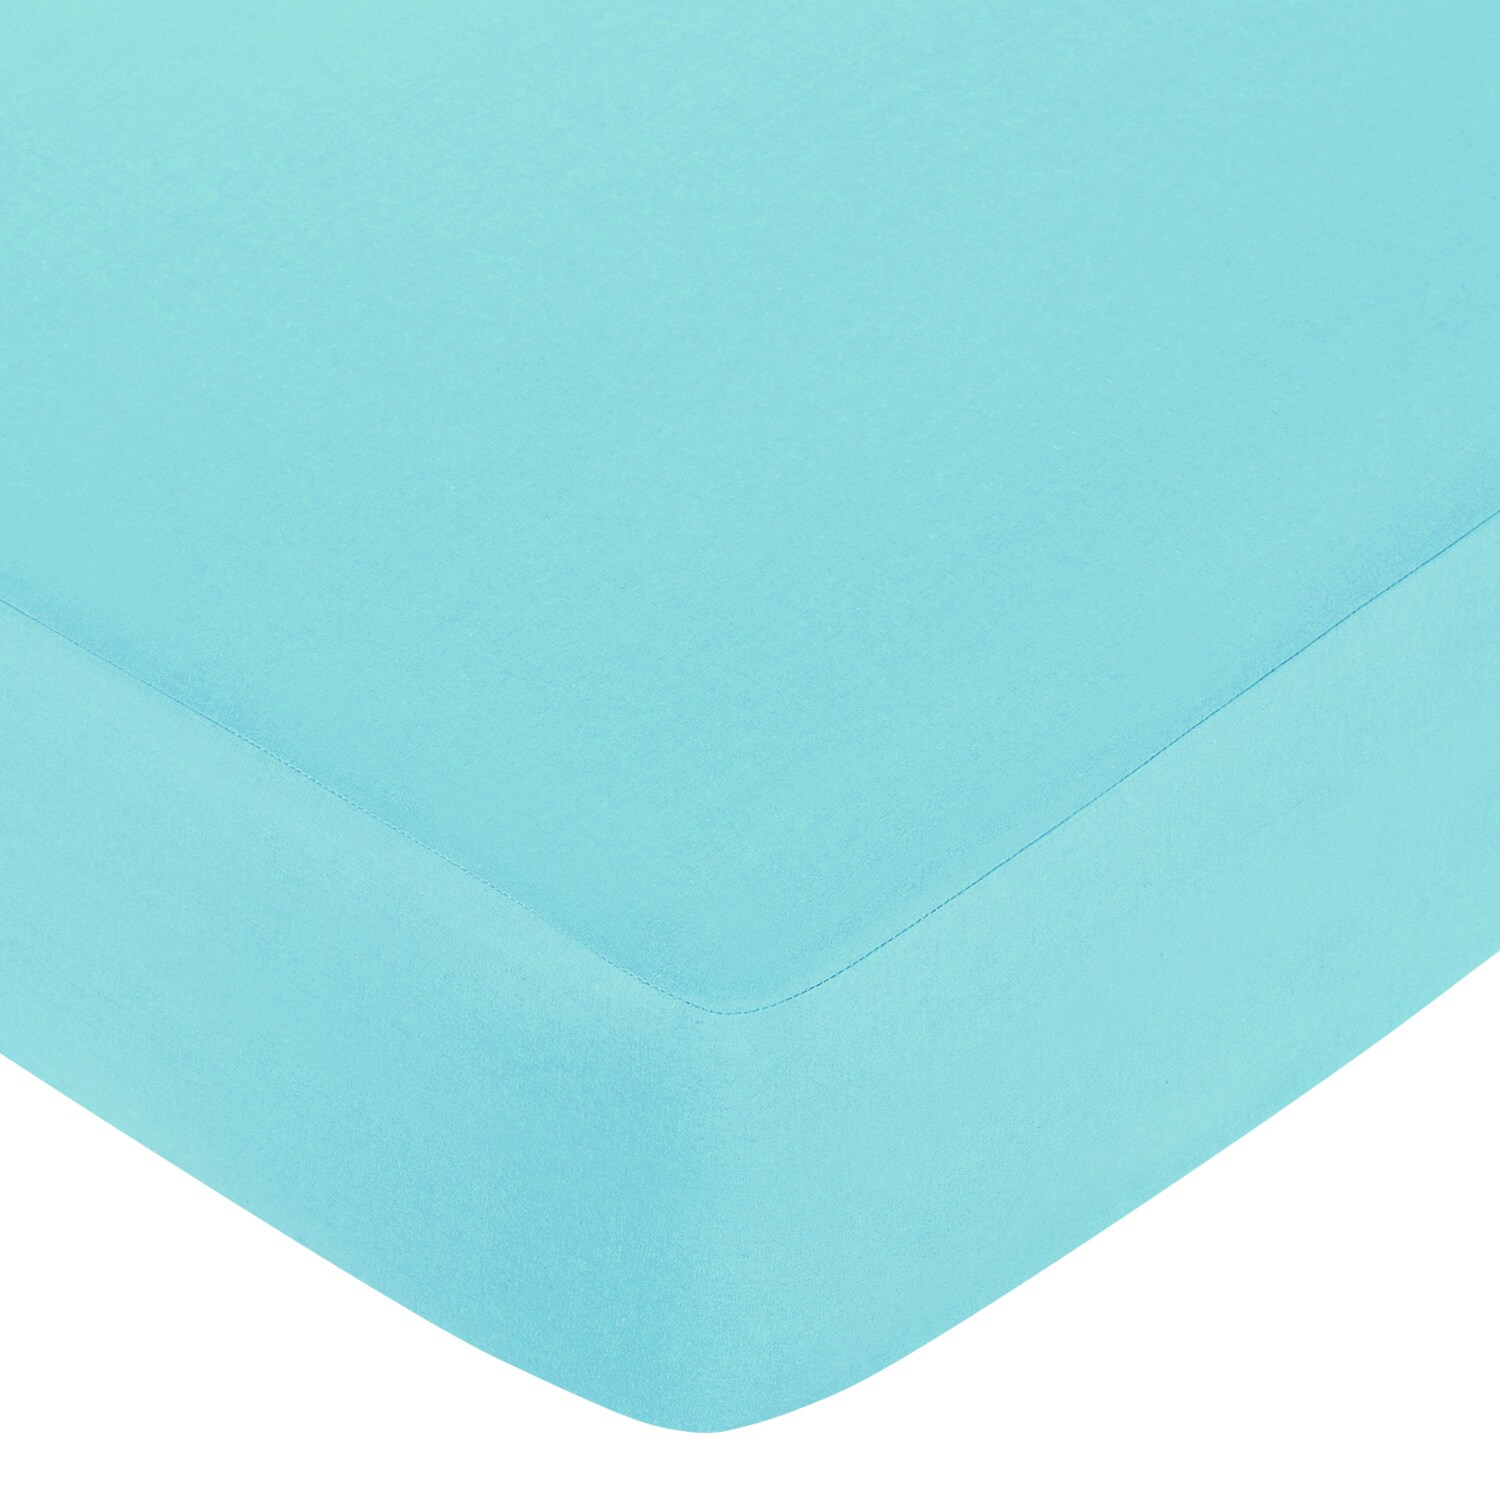 Sweet Jojo Designs Turquoise Fitted Crib Sheet